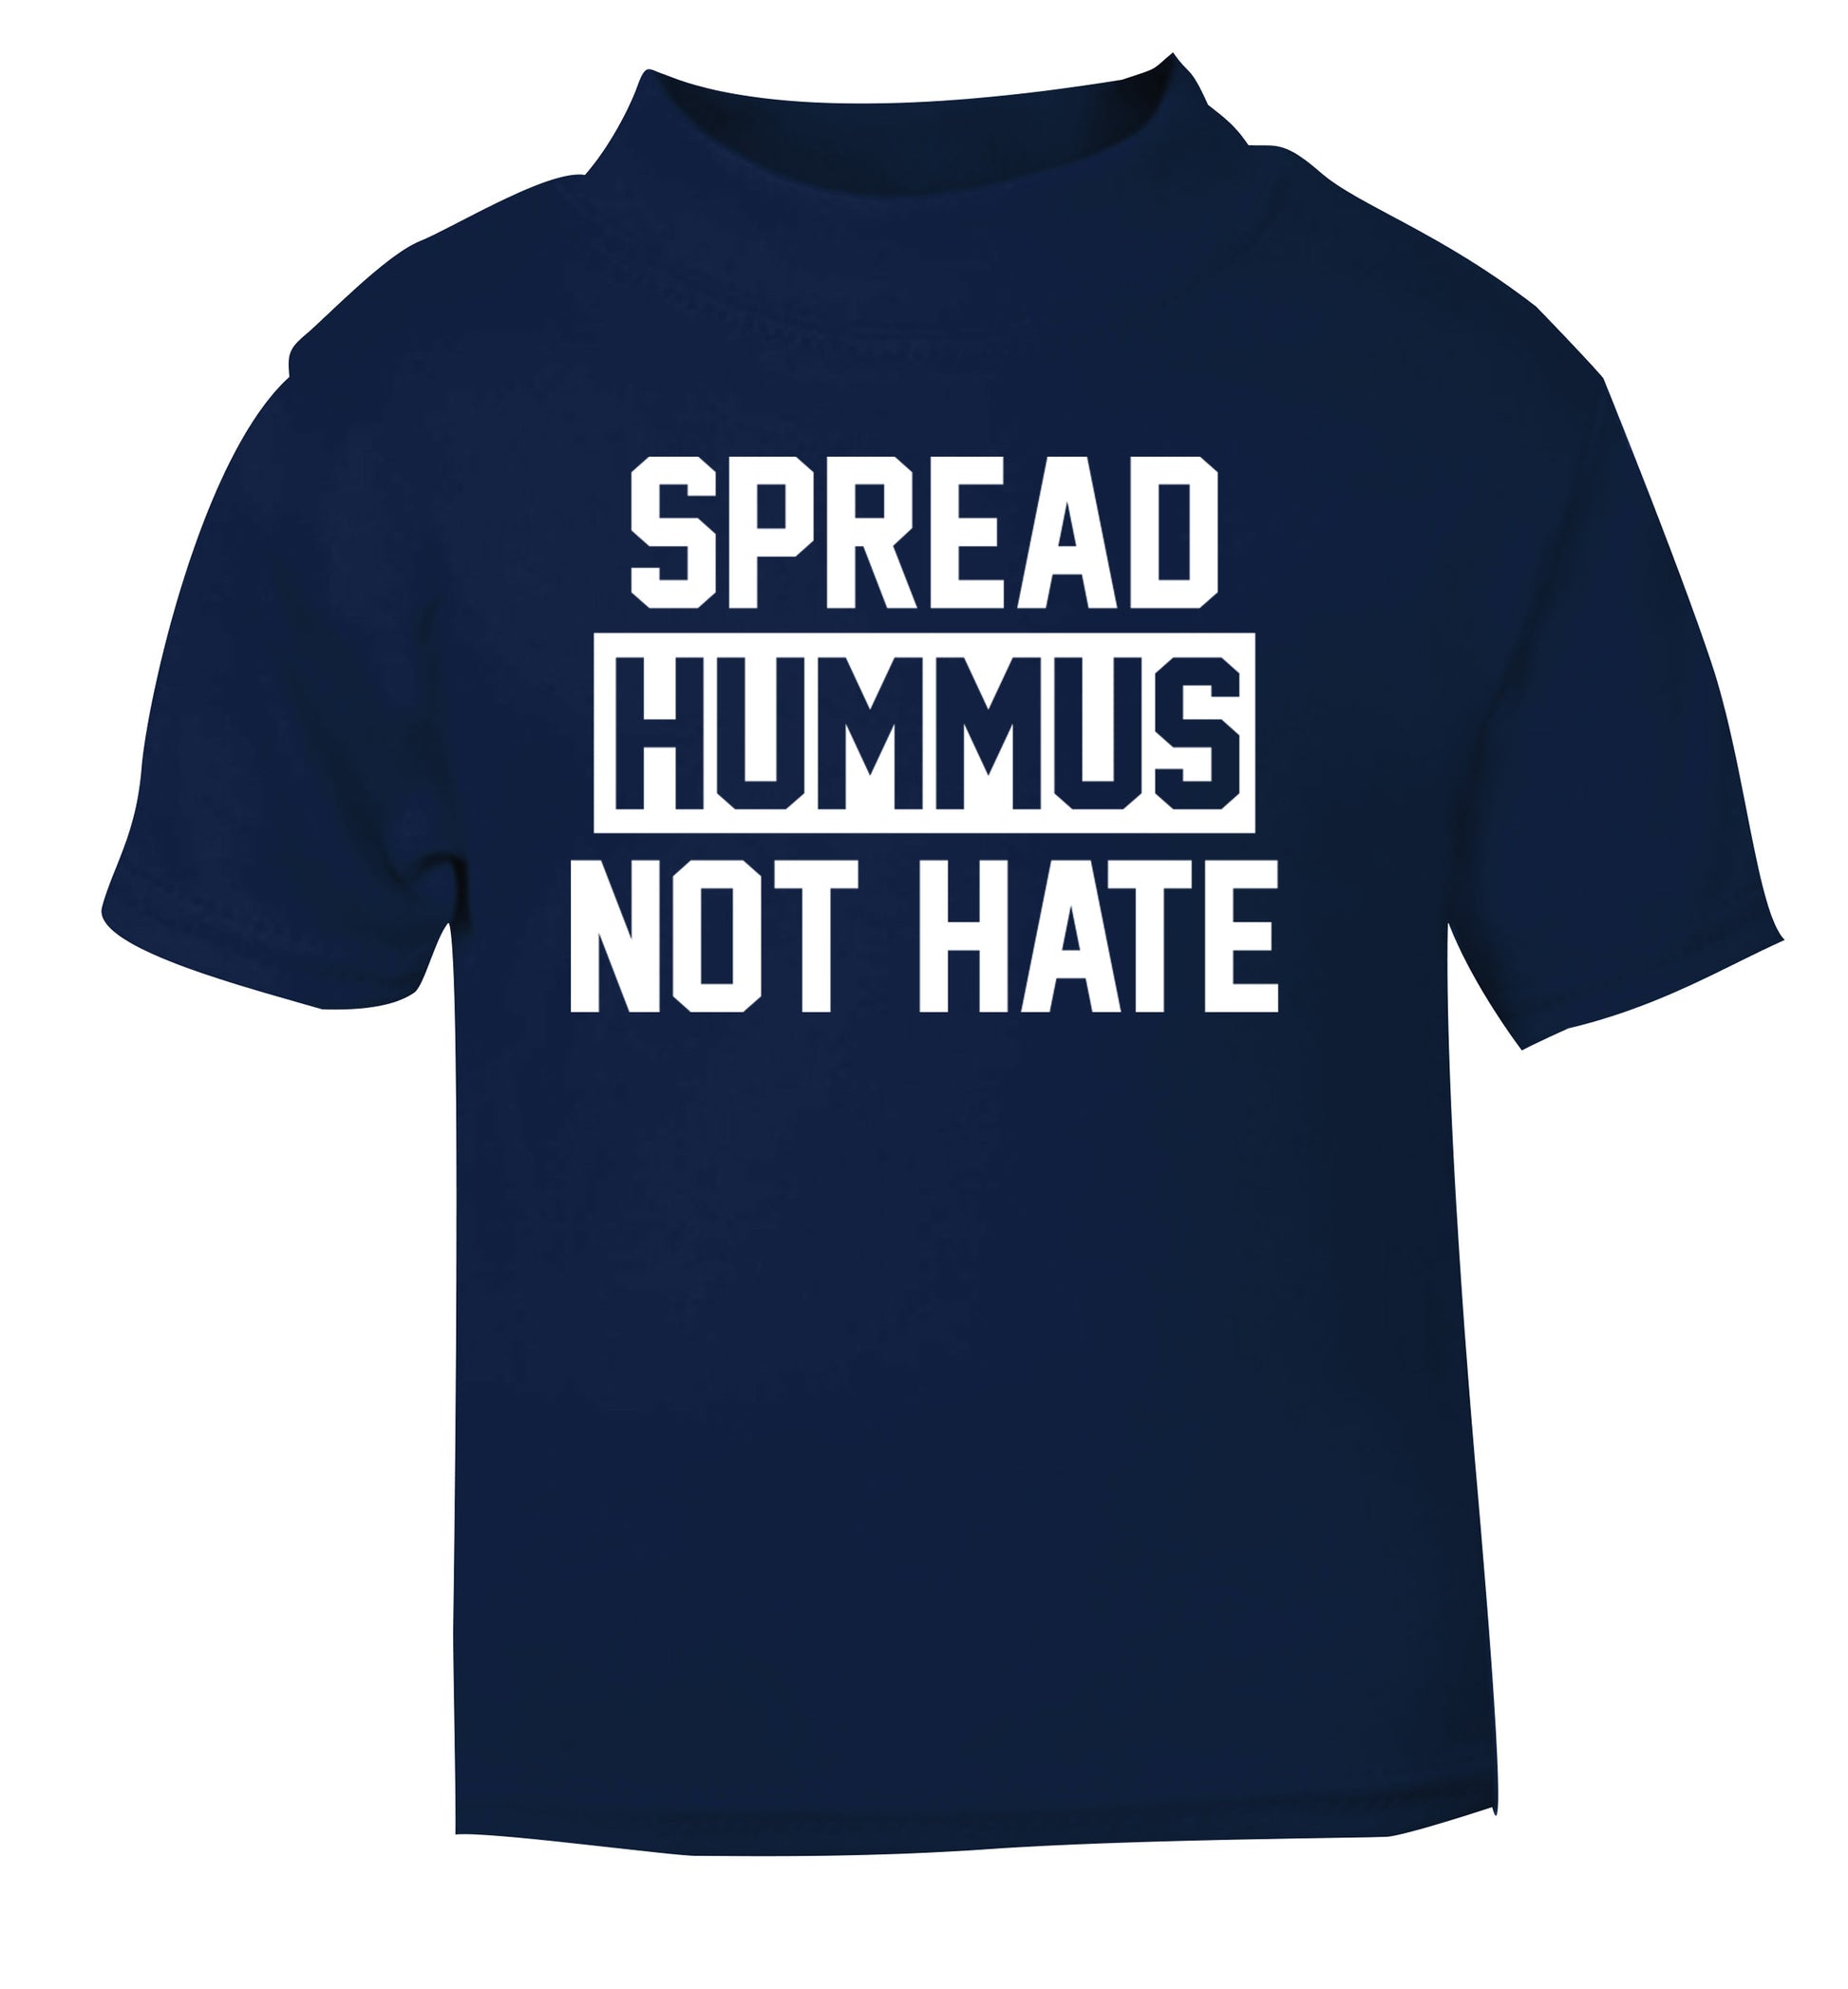 Spread hummus not hate navy Baby Toddler Tshirt 2 Years